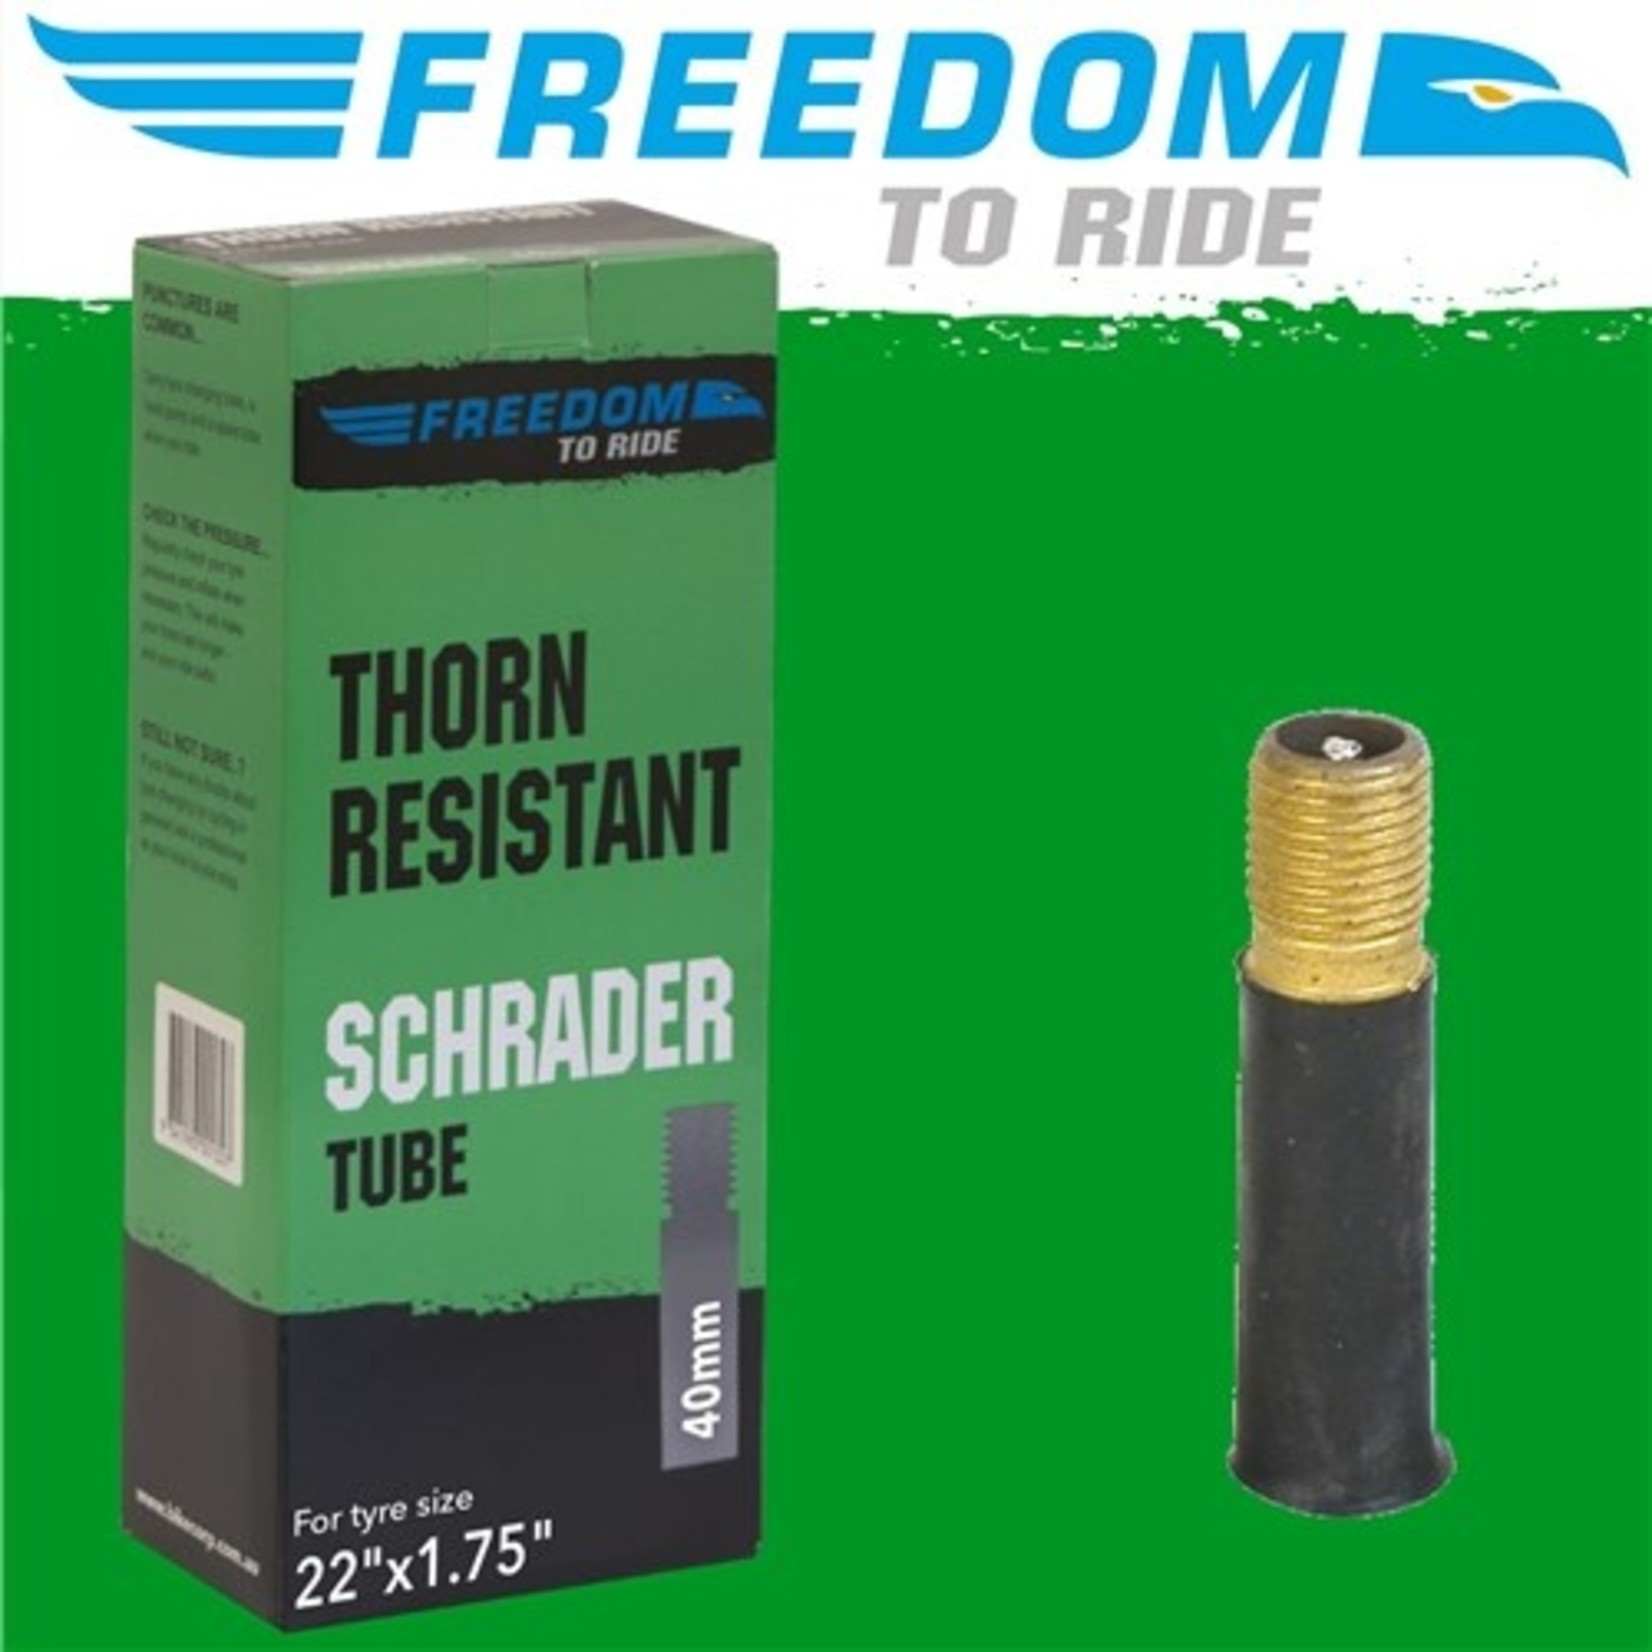 Freedom Freedom Bike Tube - 22" X 1.75" - Thorn Resistant Schrader Valve 40mm